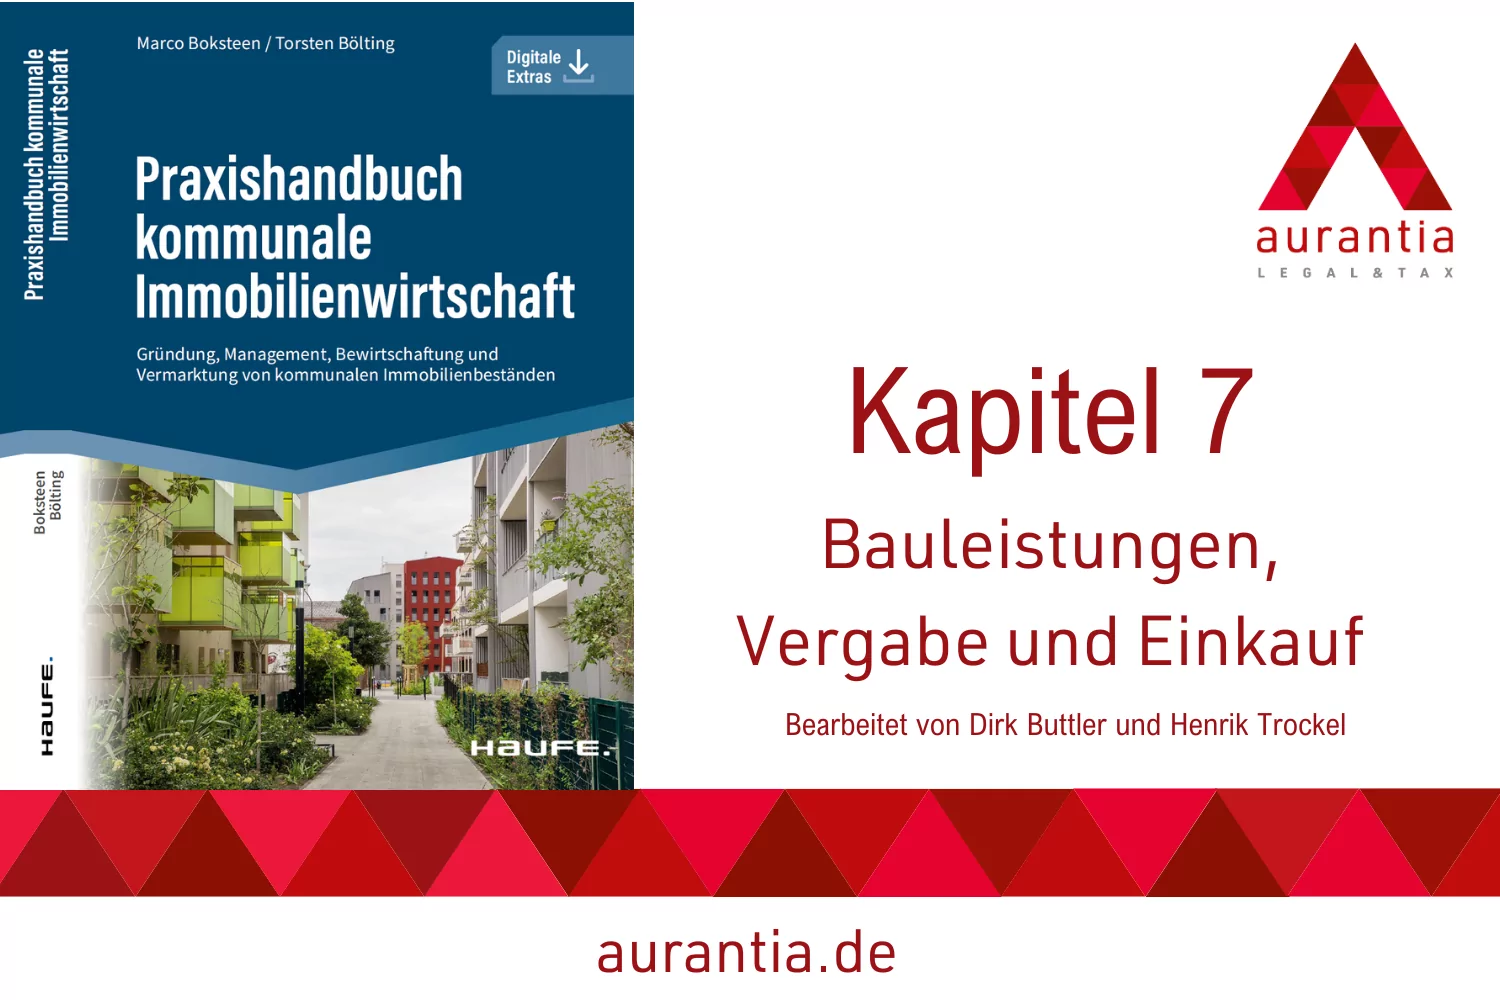 Praxishandbuch kommunale Immobilienwirtschaft aurantia.de/blog